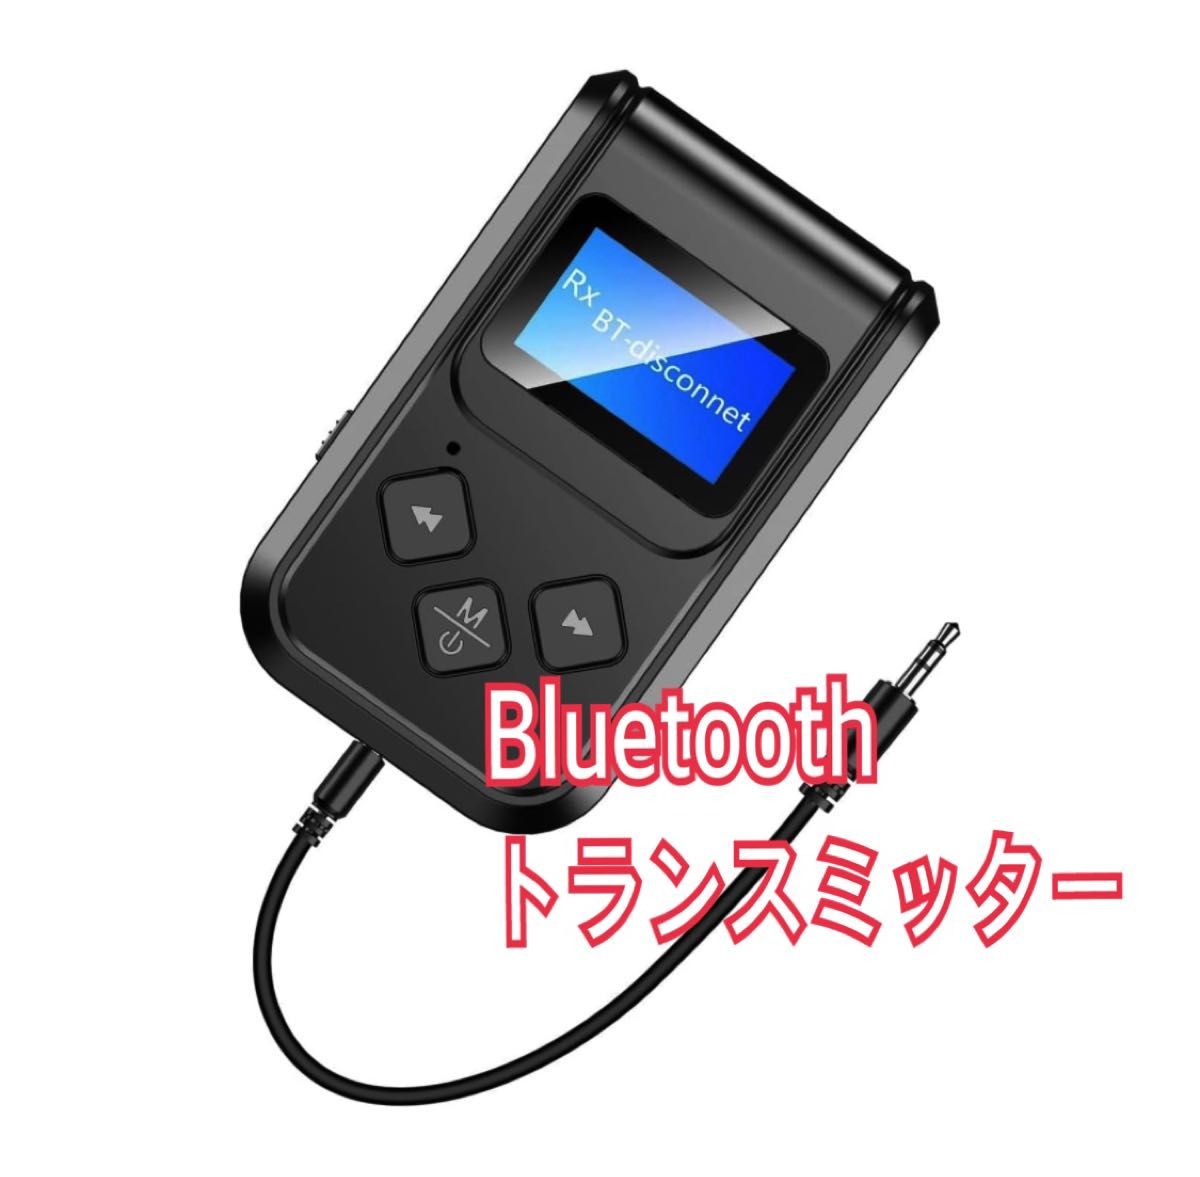 Bluetooth トランスミッター レシーバー 送信機 受信機 ハンズフリー 一台二役 日本語説明書 軽量小型 車